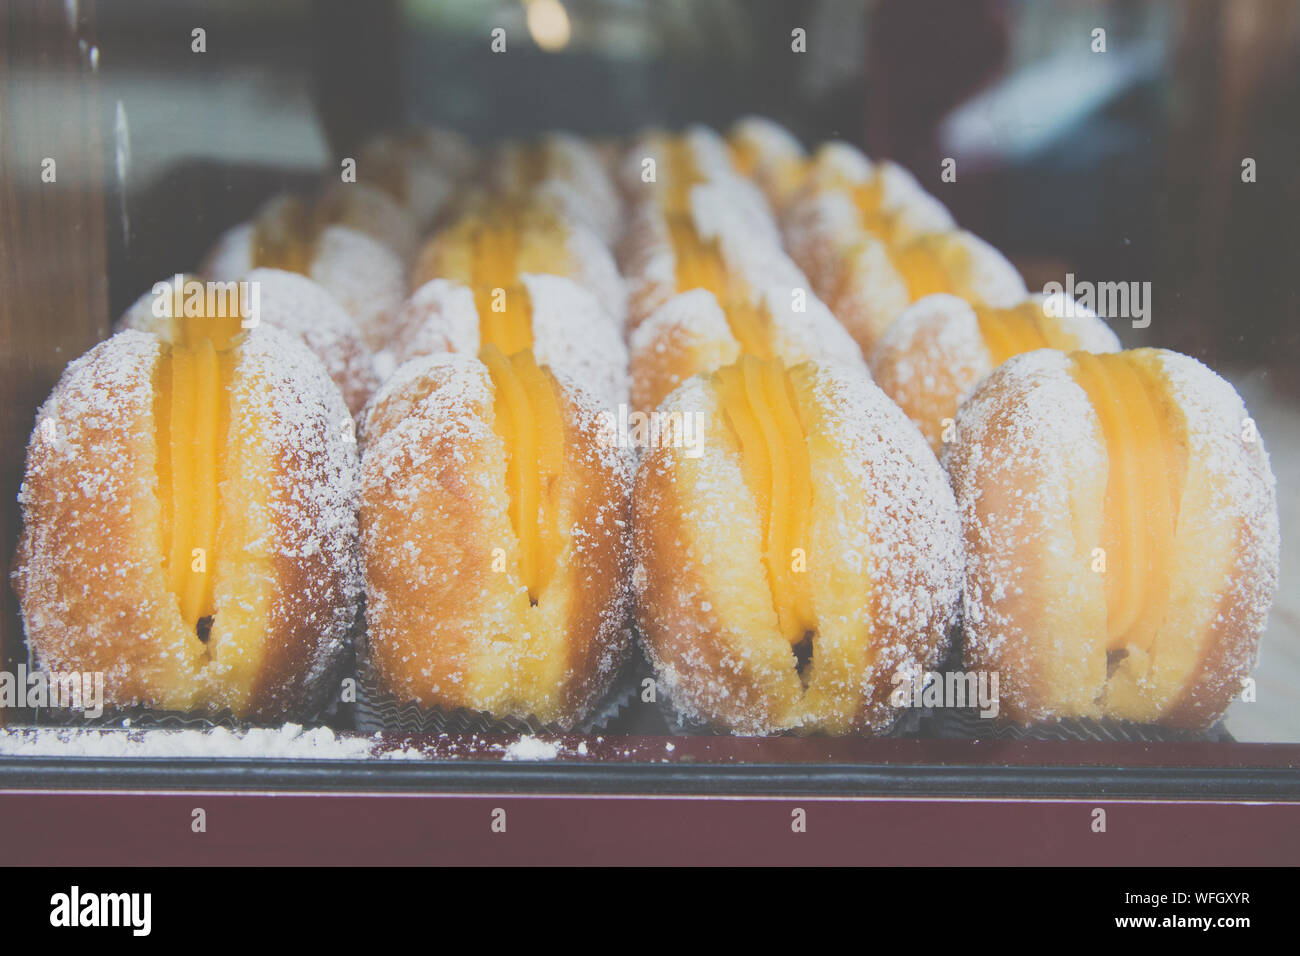 Bola de Berlim pastries, Portugal Stock Photo - Alamy